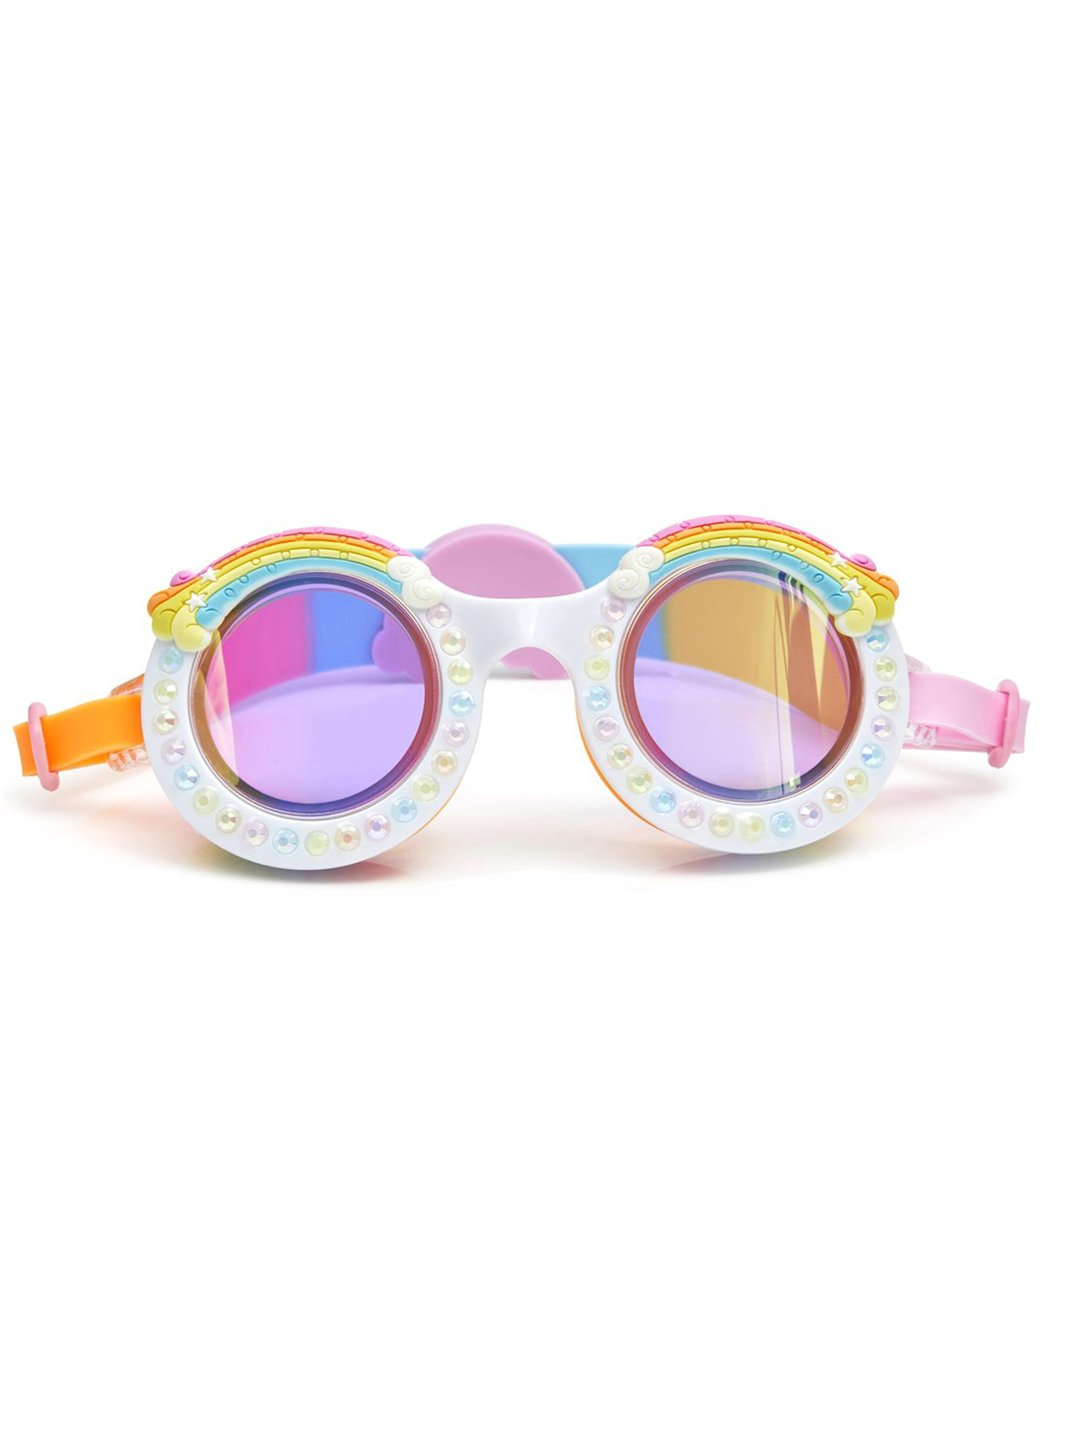 Fun swim goggles for kids: Rainbow goggles at Stella Cove are like My Little Pony meets Eltton John!